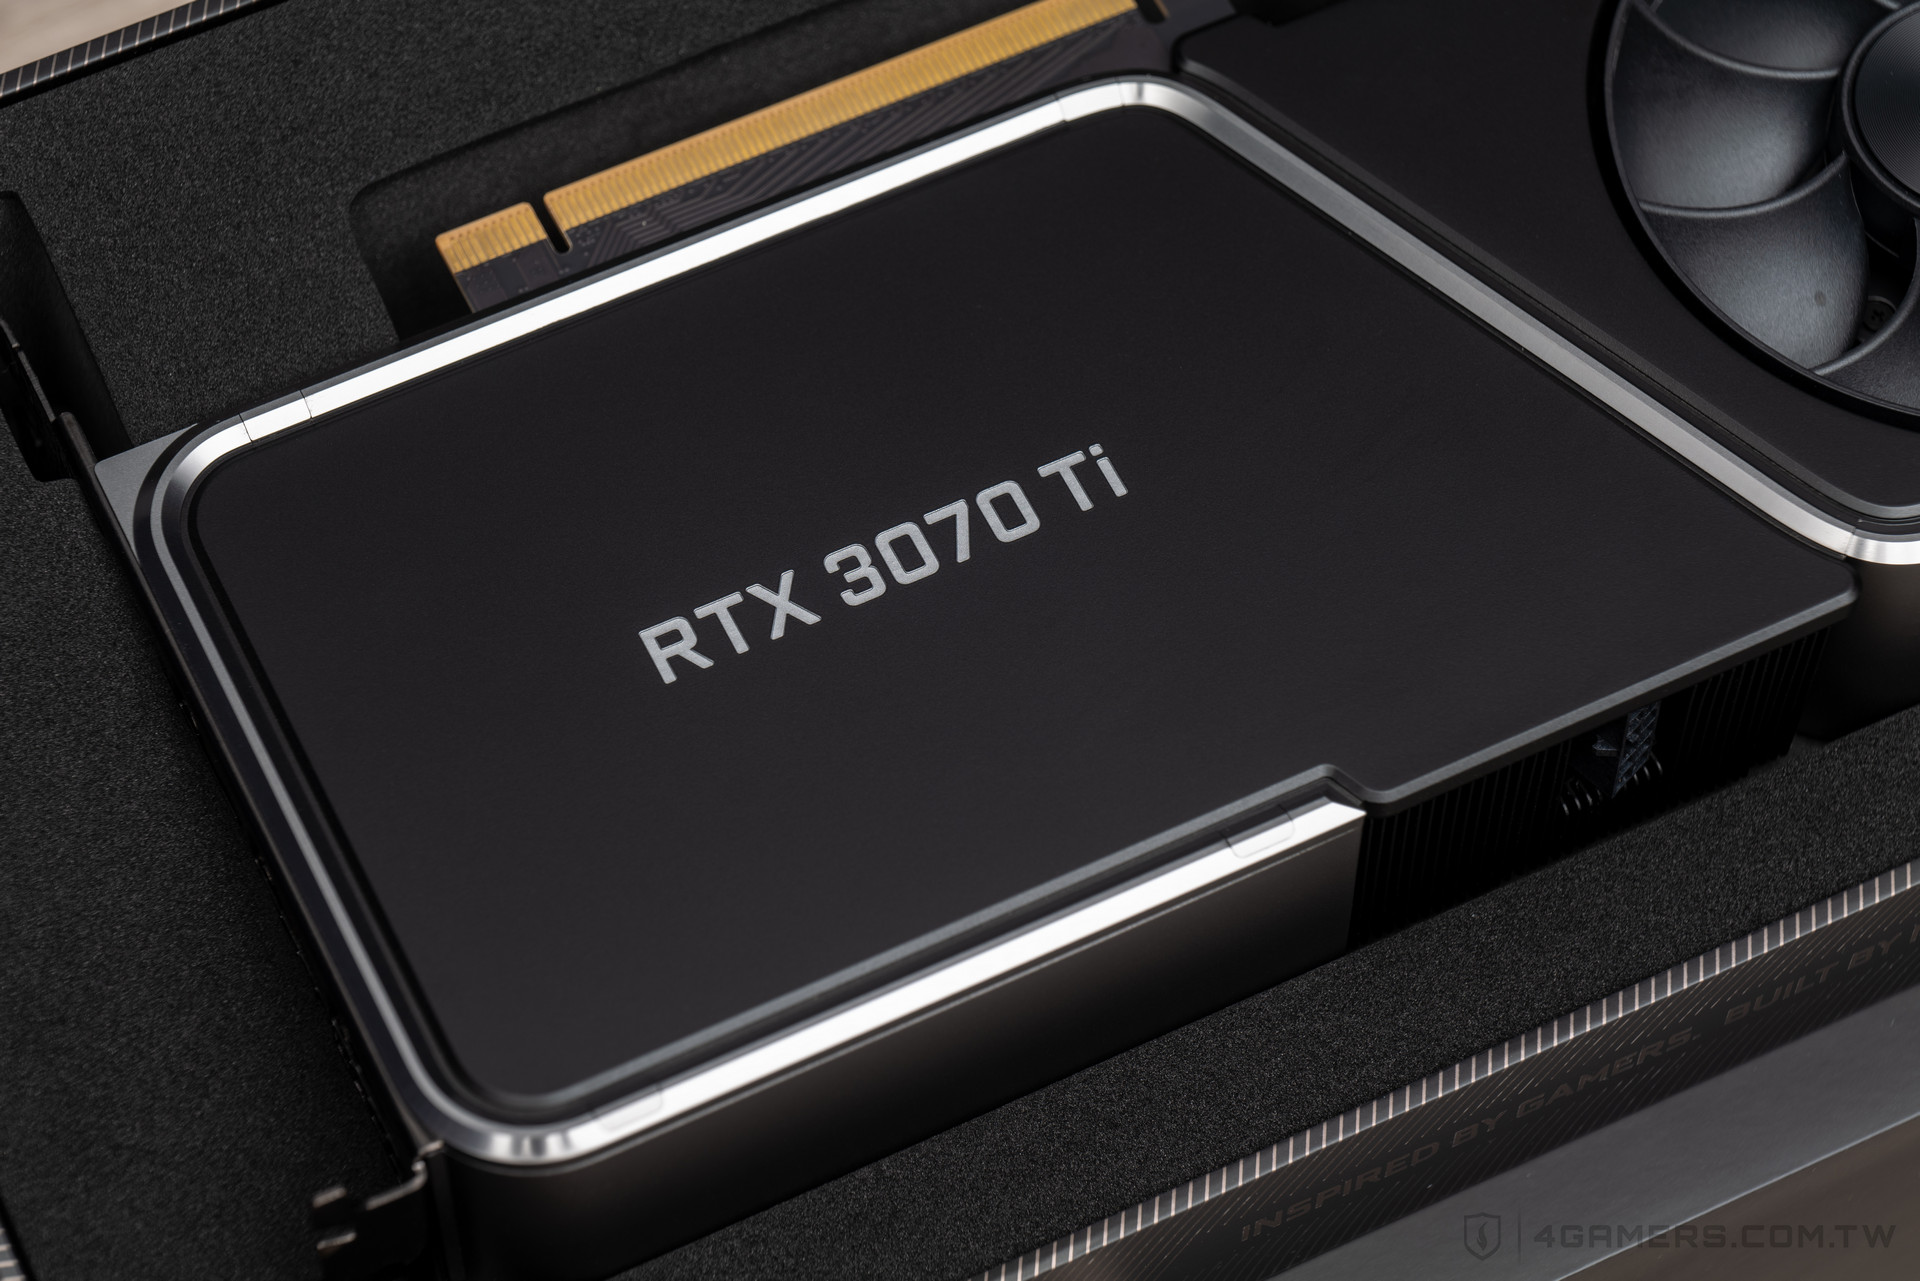 NVIDIA GeForce RTX 3070 Ti Founders Edition 創始版